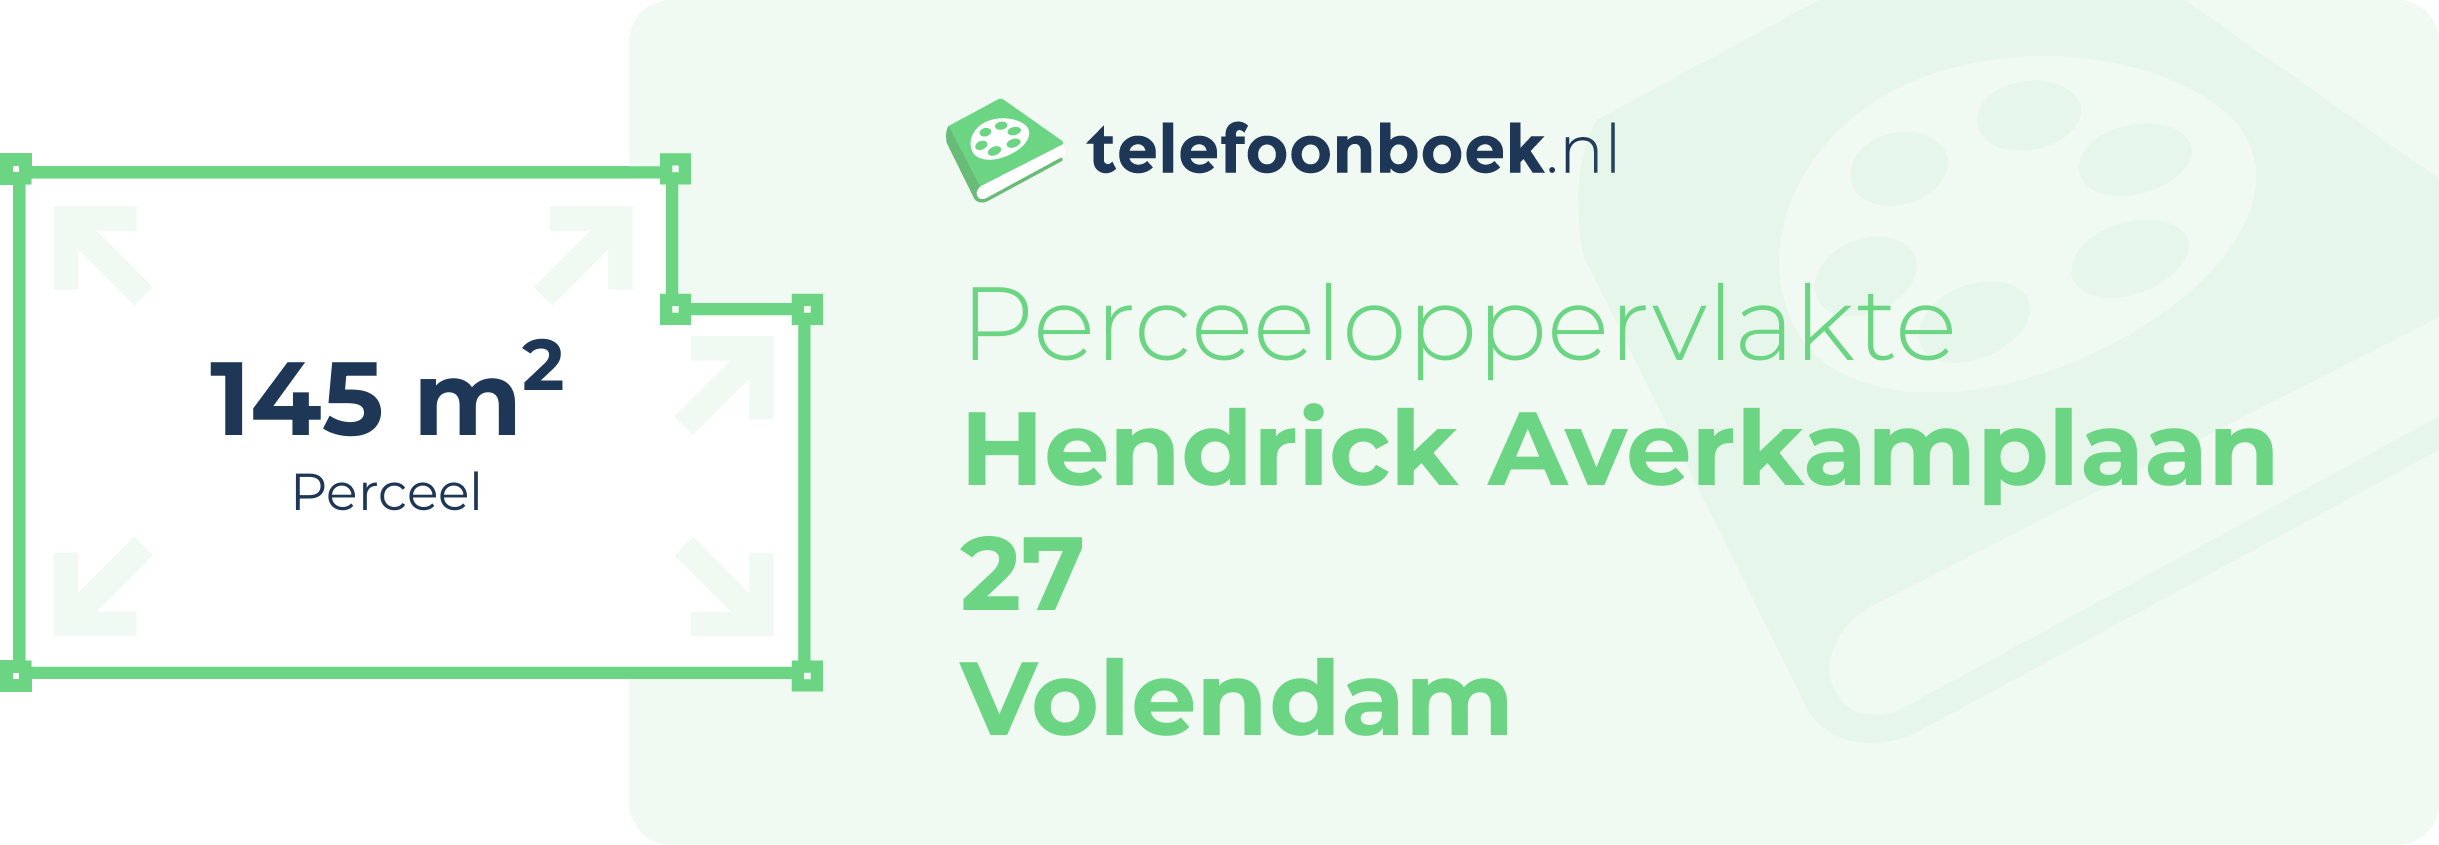 Perceeloppervlakte Hendrick Averkamplaan 27 Volendam